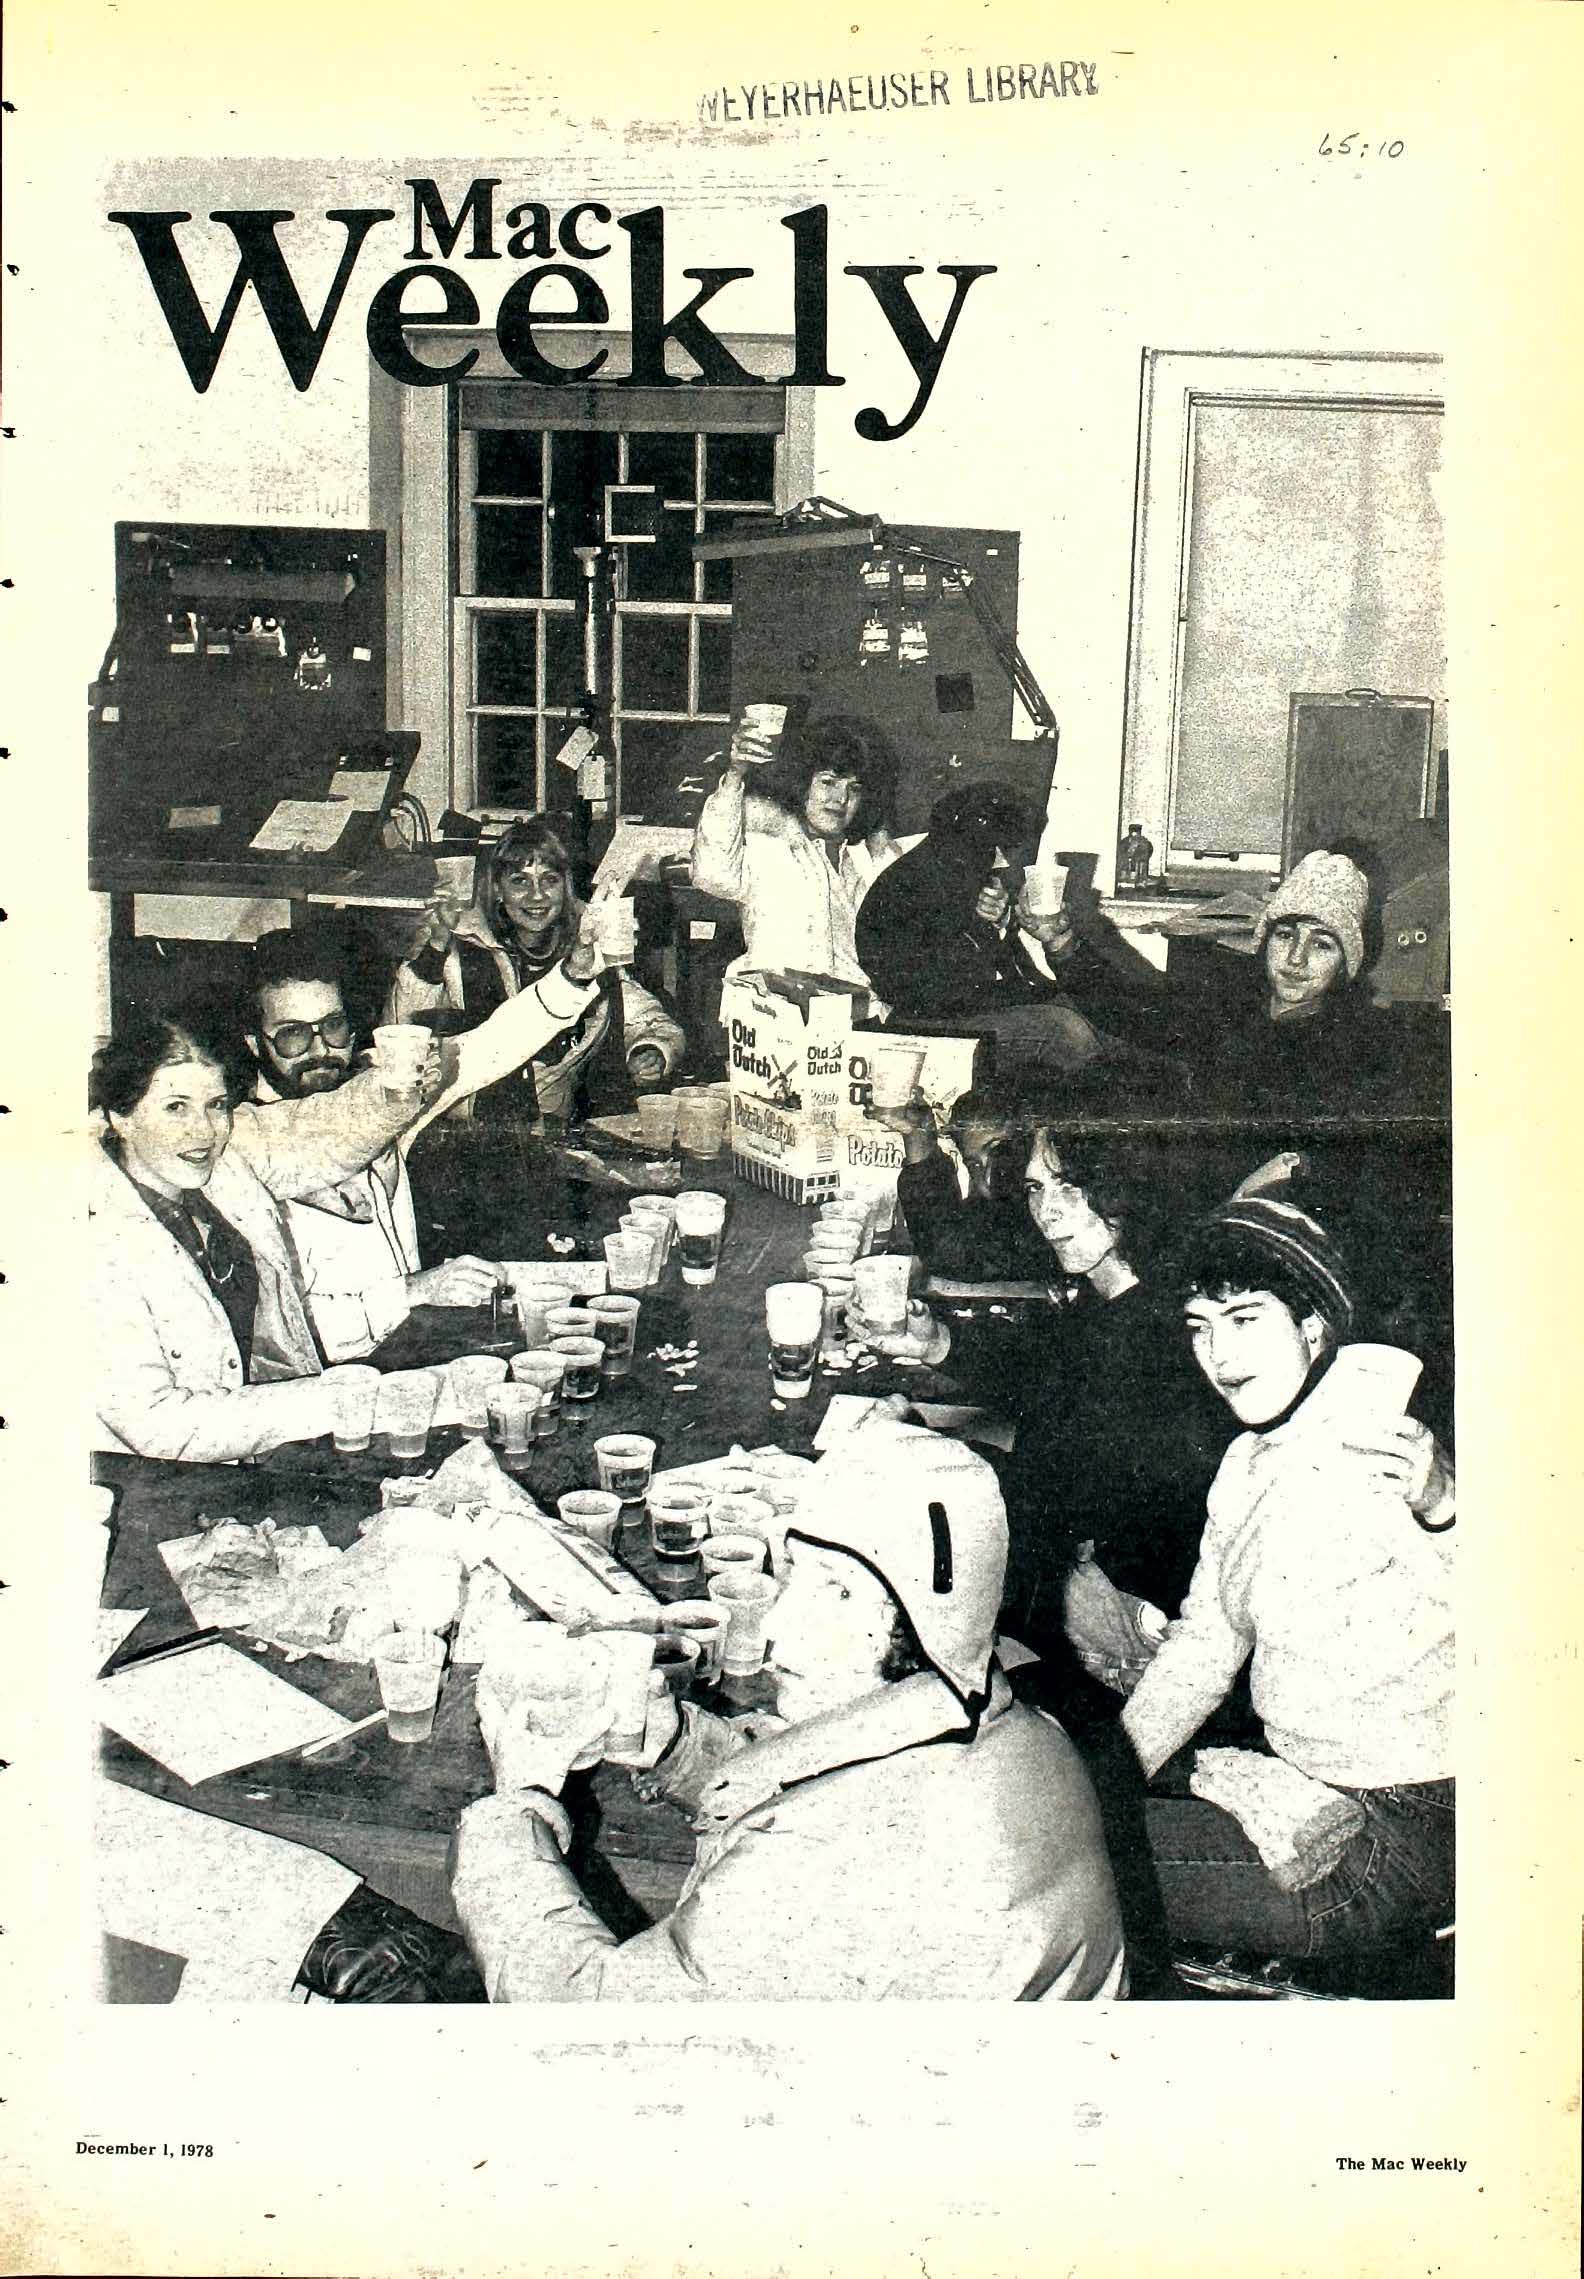 The Mac Weekly, December 1, 1978. Staff.